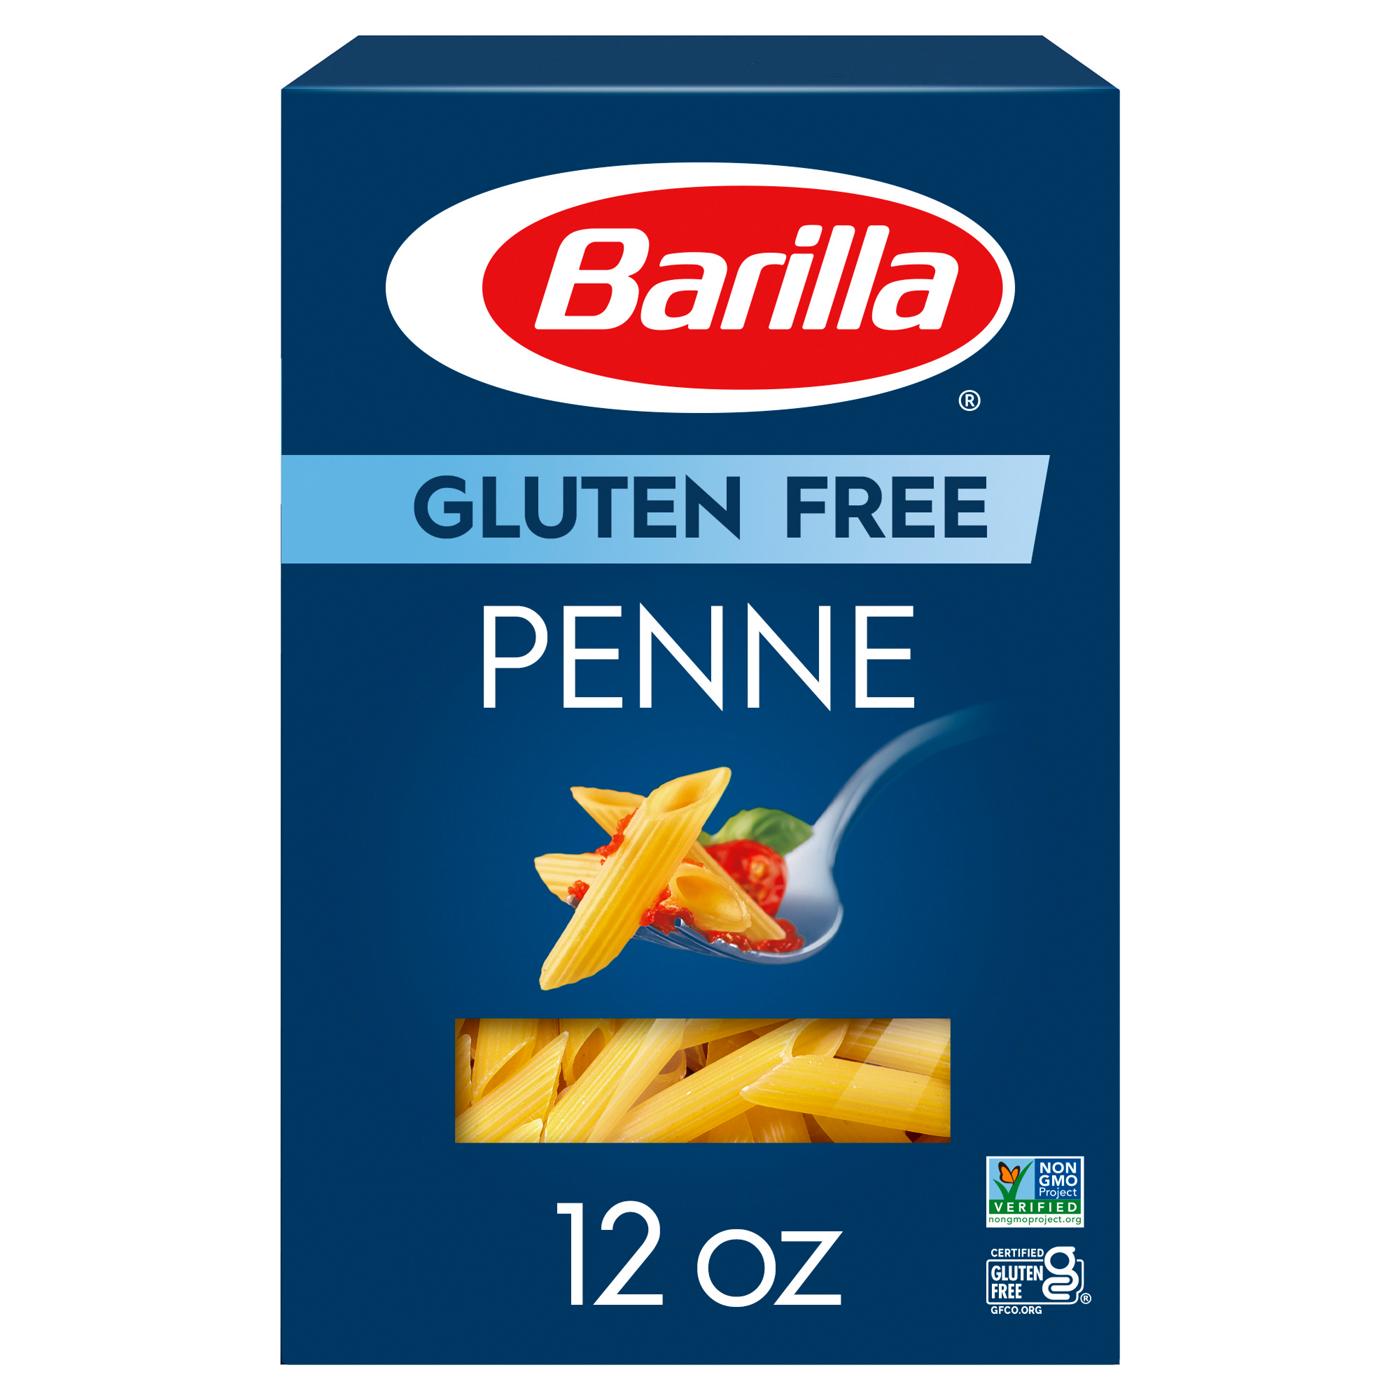 Barilla Gluten Free Penne Pasta; image 1 of 7